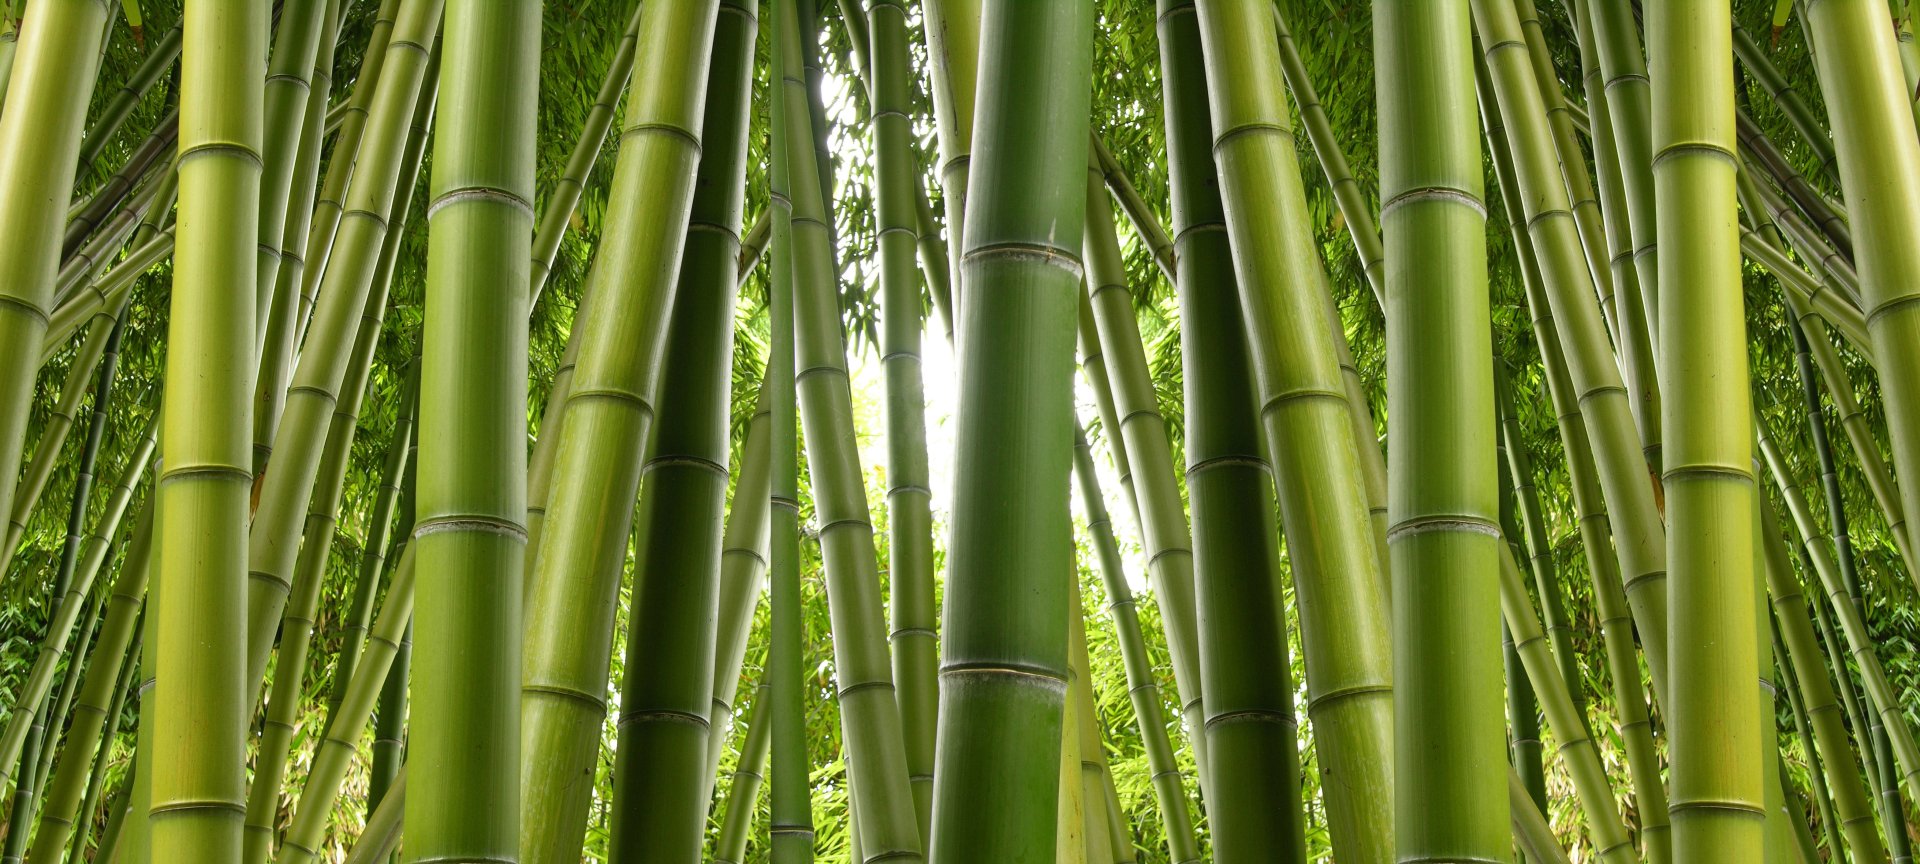 Bamboo Computer Wallpapers, Desktop Backgrounds | 6275x2824 | ID:669524